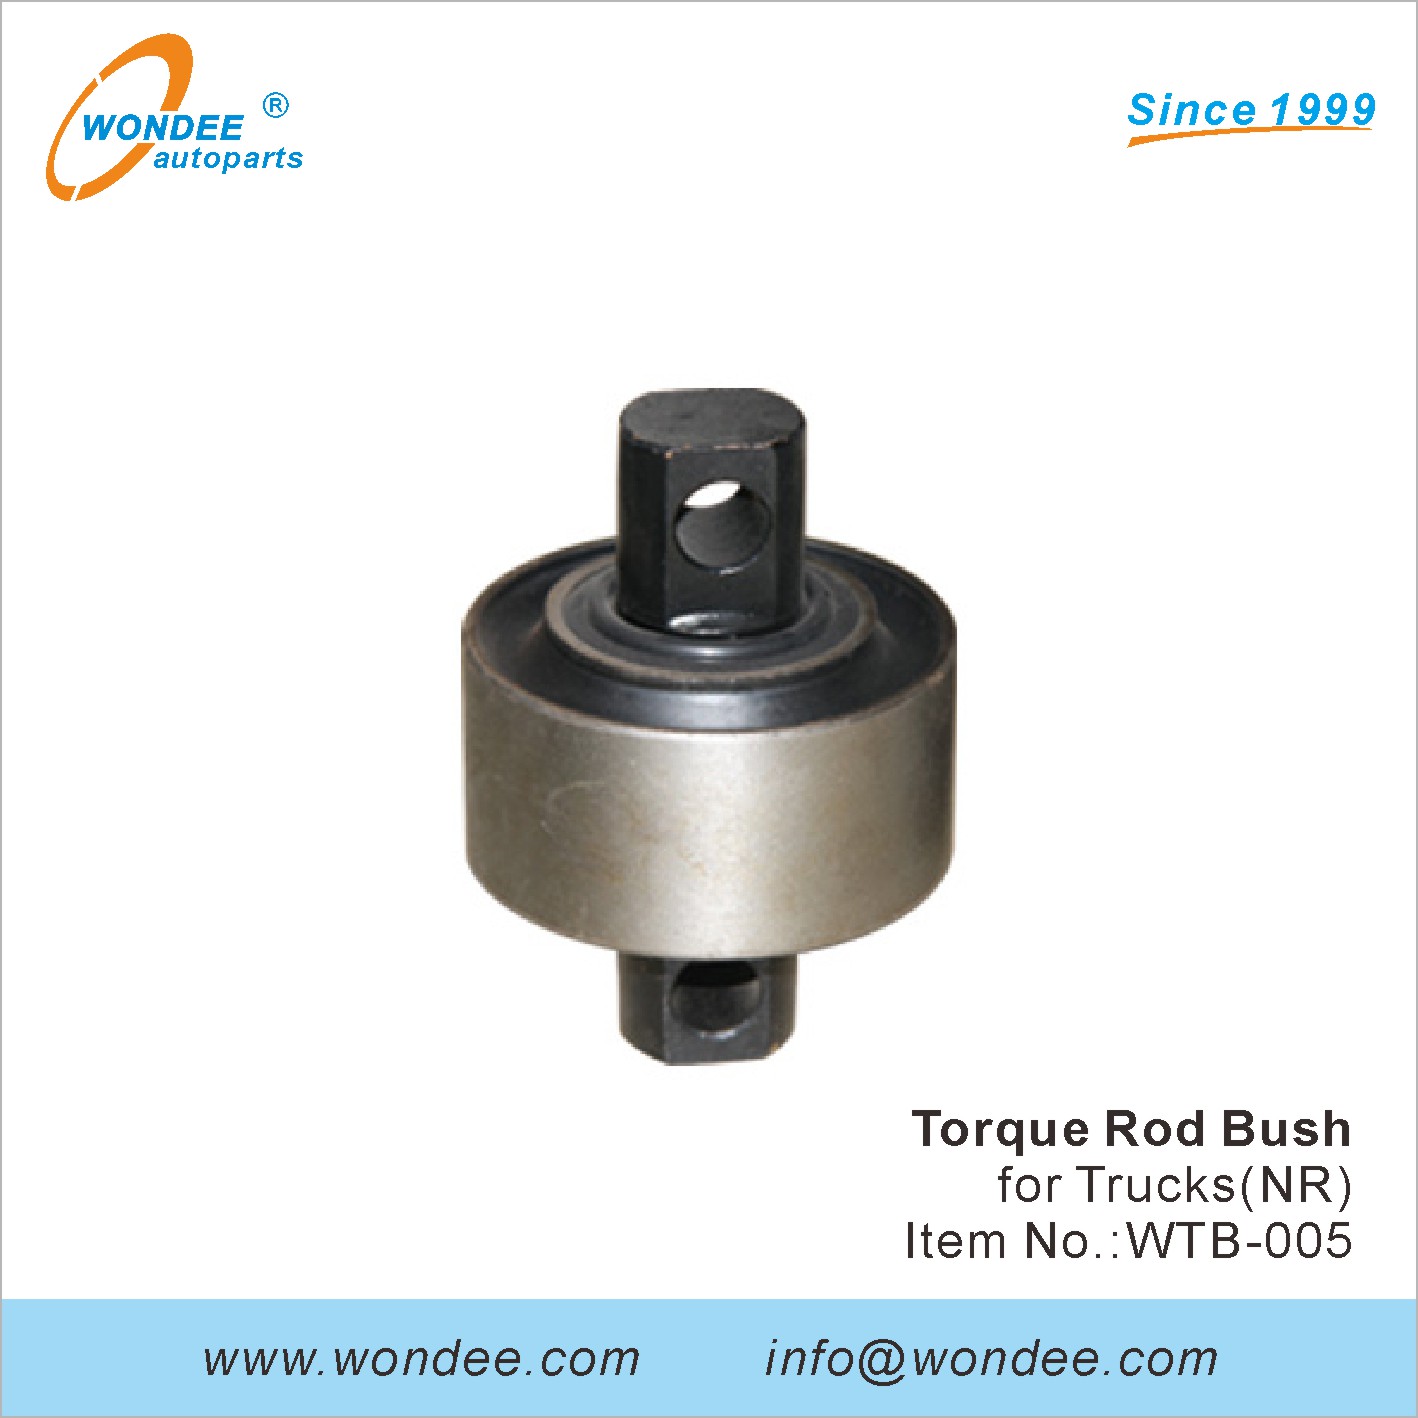 WONDEE torque rod bush (5)